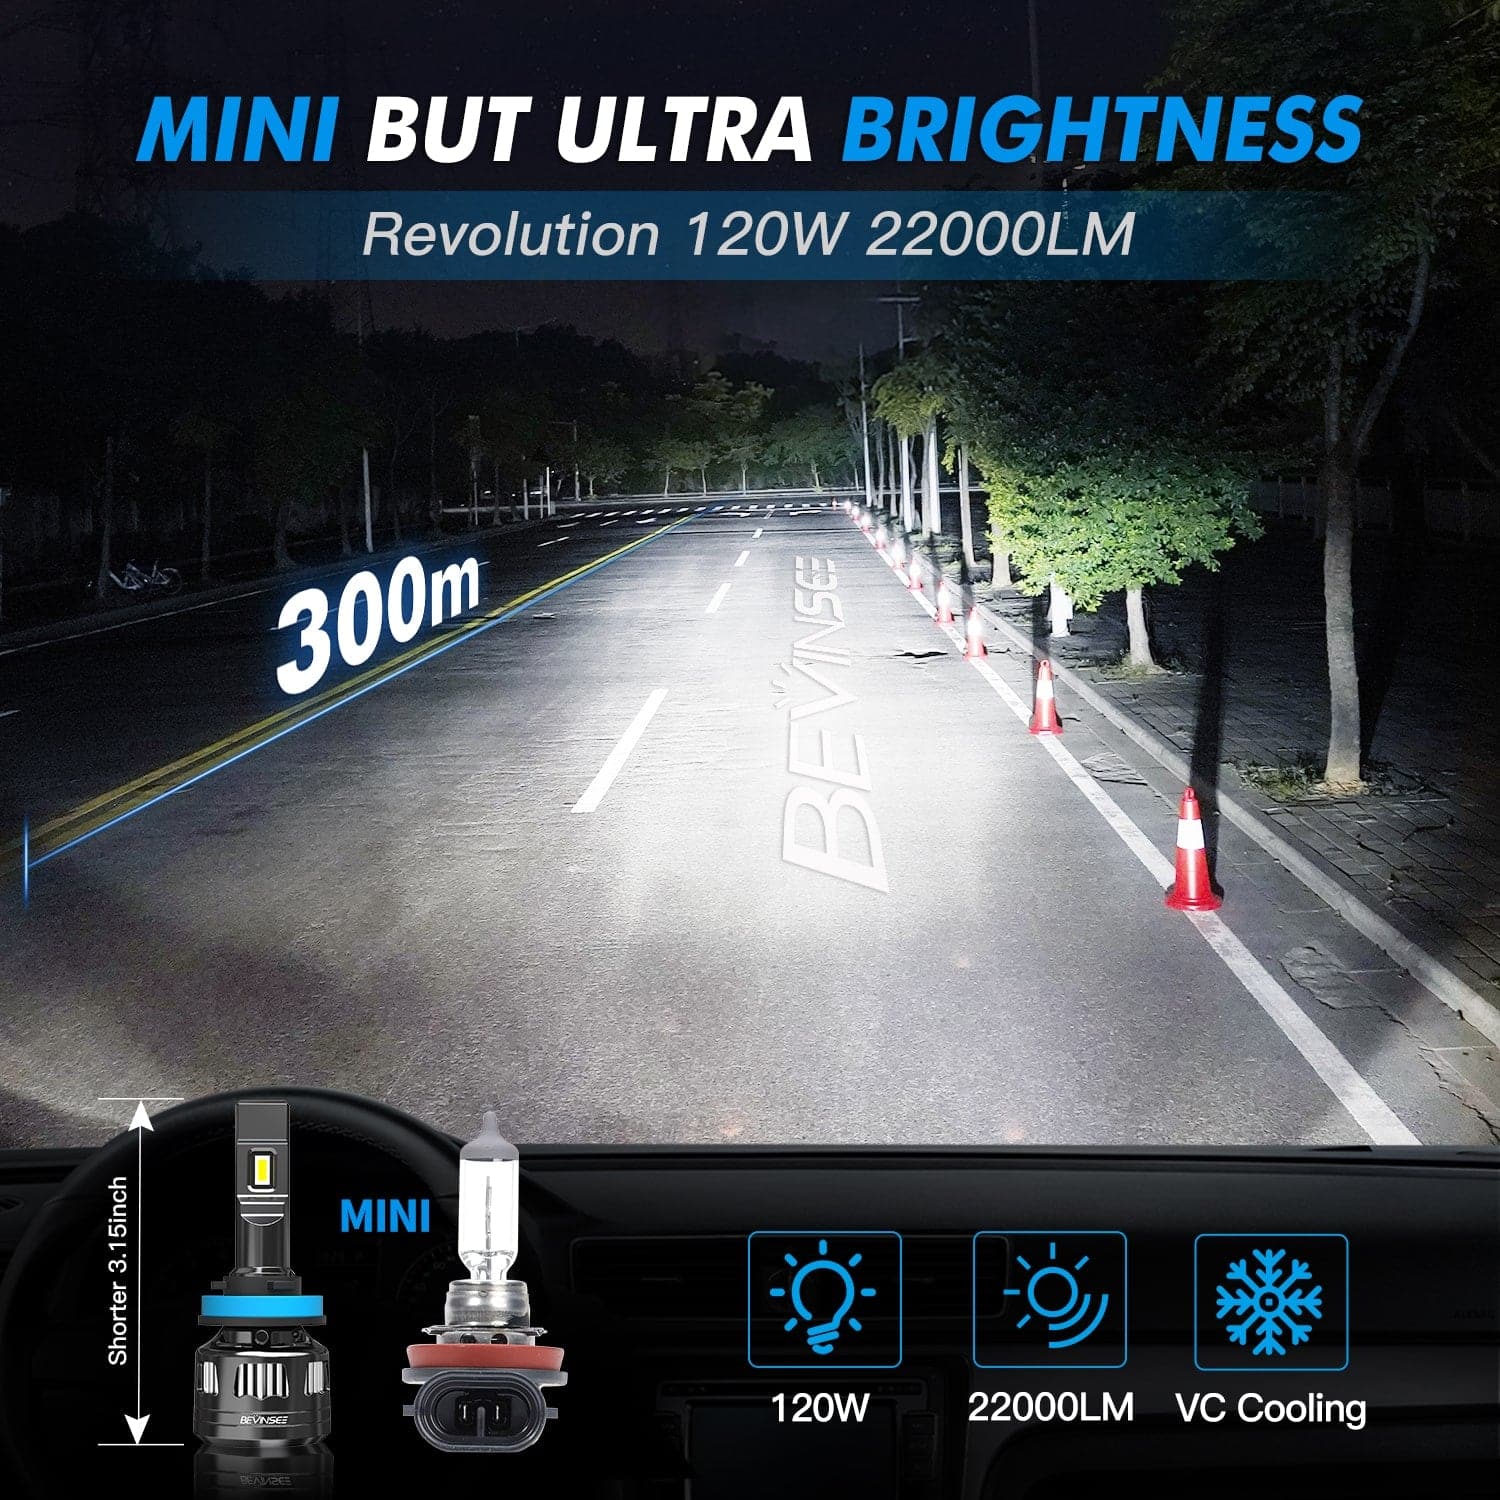 Bevinsee V45 H11/H8/H9 LED Headlight Bulbs 22000 Lumens 6000K